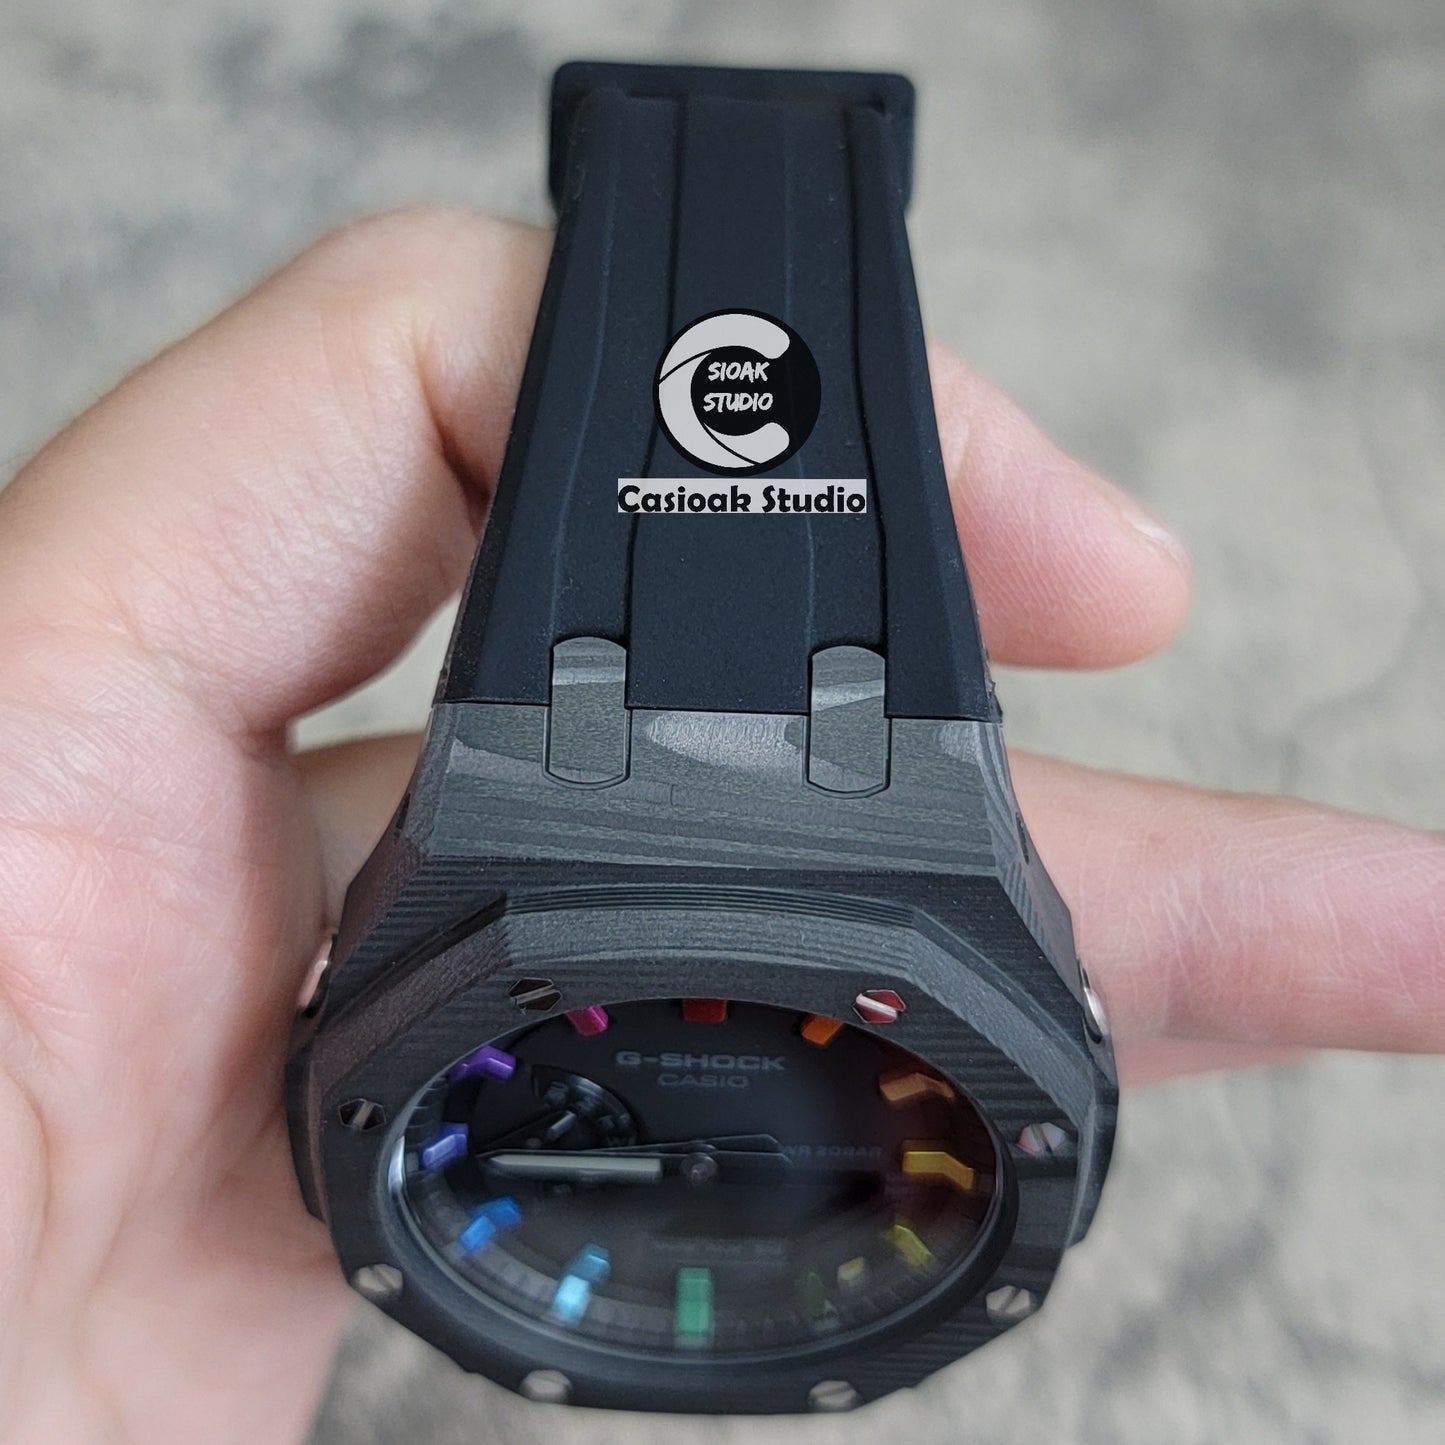 Casioak Mod Watch Carbon Fiber Case Black Strap Black Rainbow Time Mark Black Dial 44mm - Casioak Studio